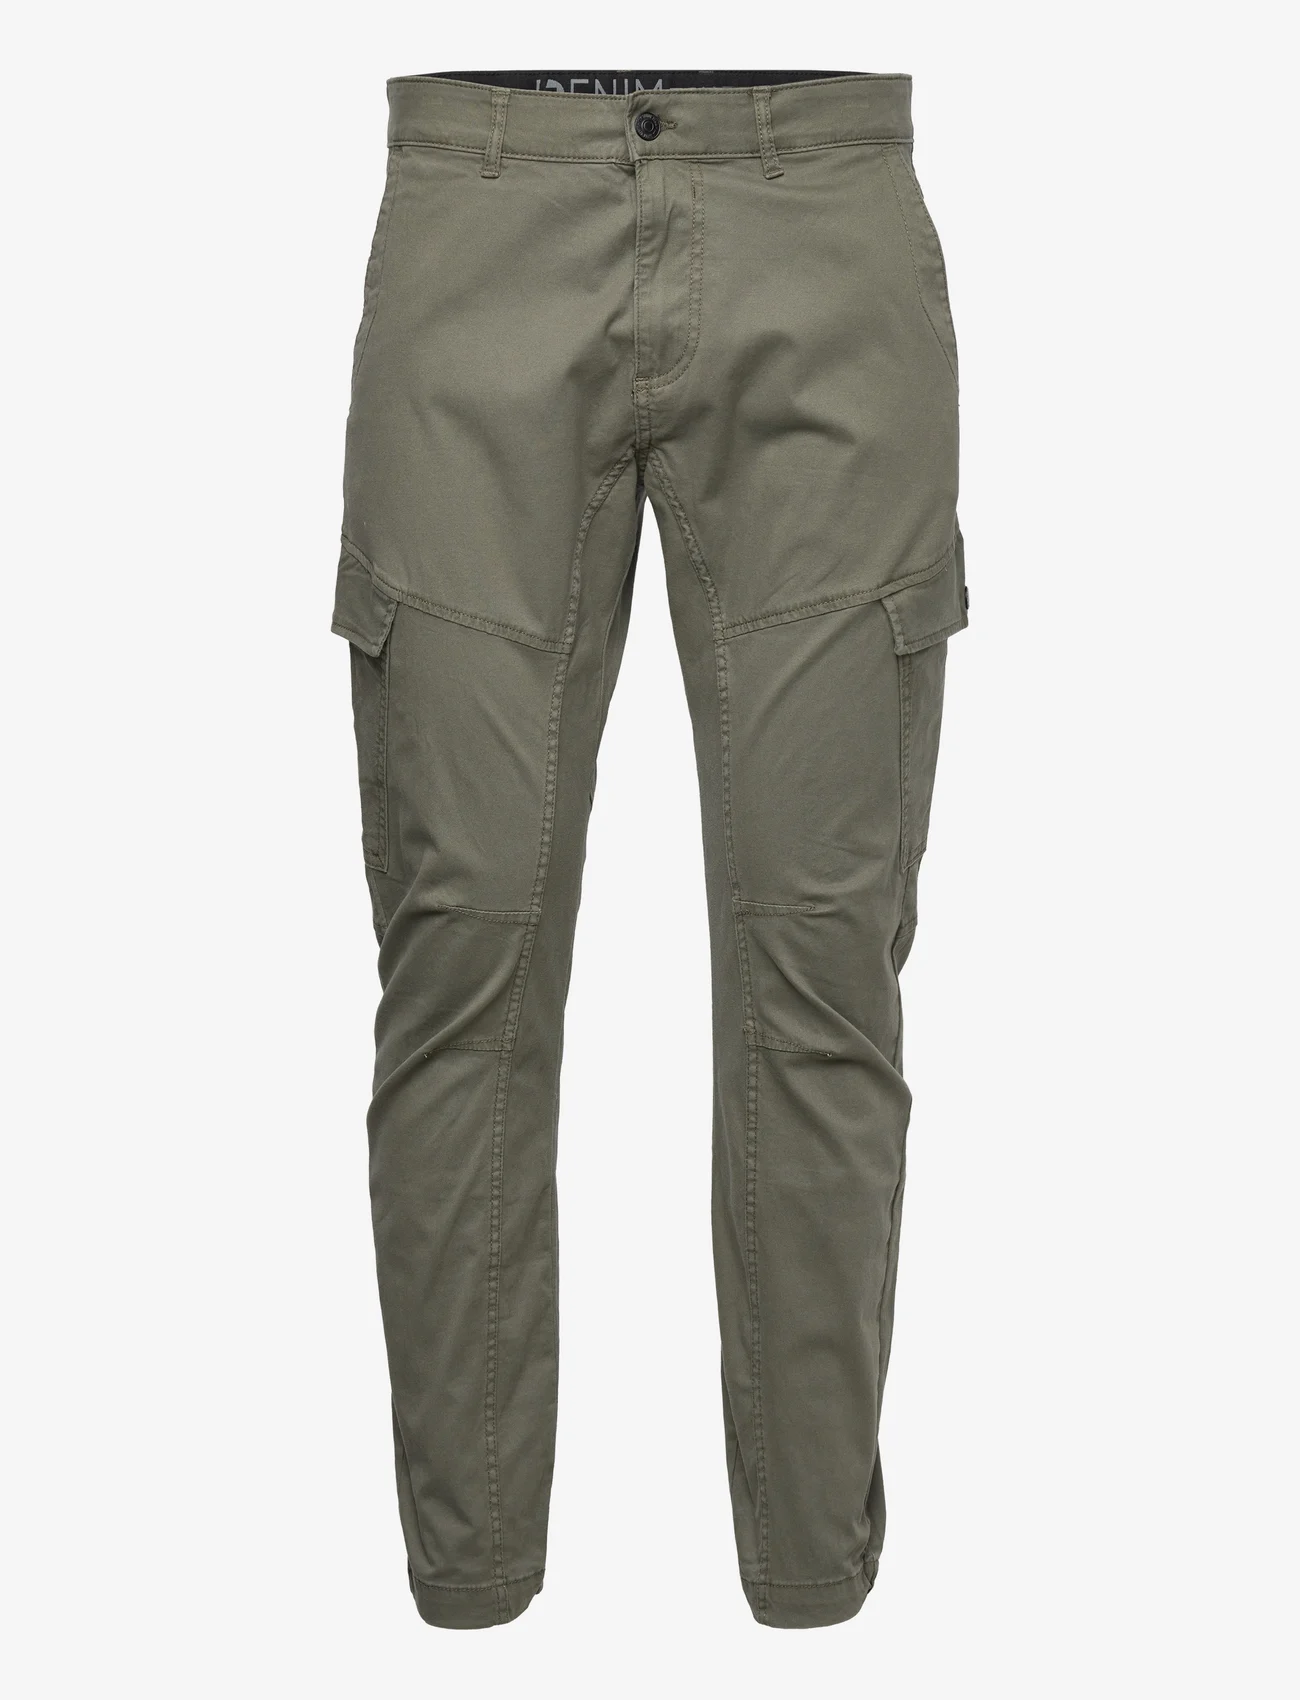 Tom Tailor - slim cargo pants - cargobyxor - dusty olive green - 0